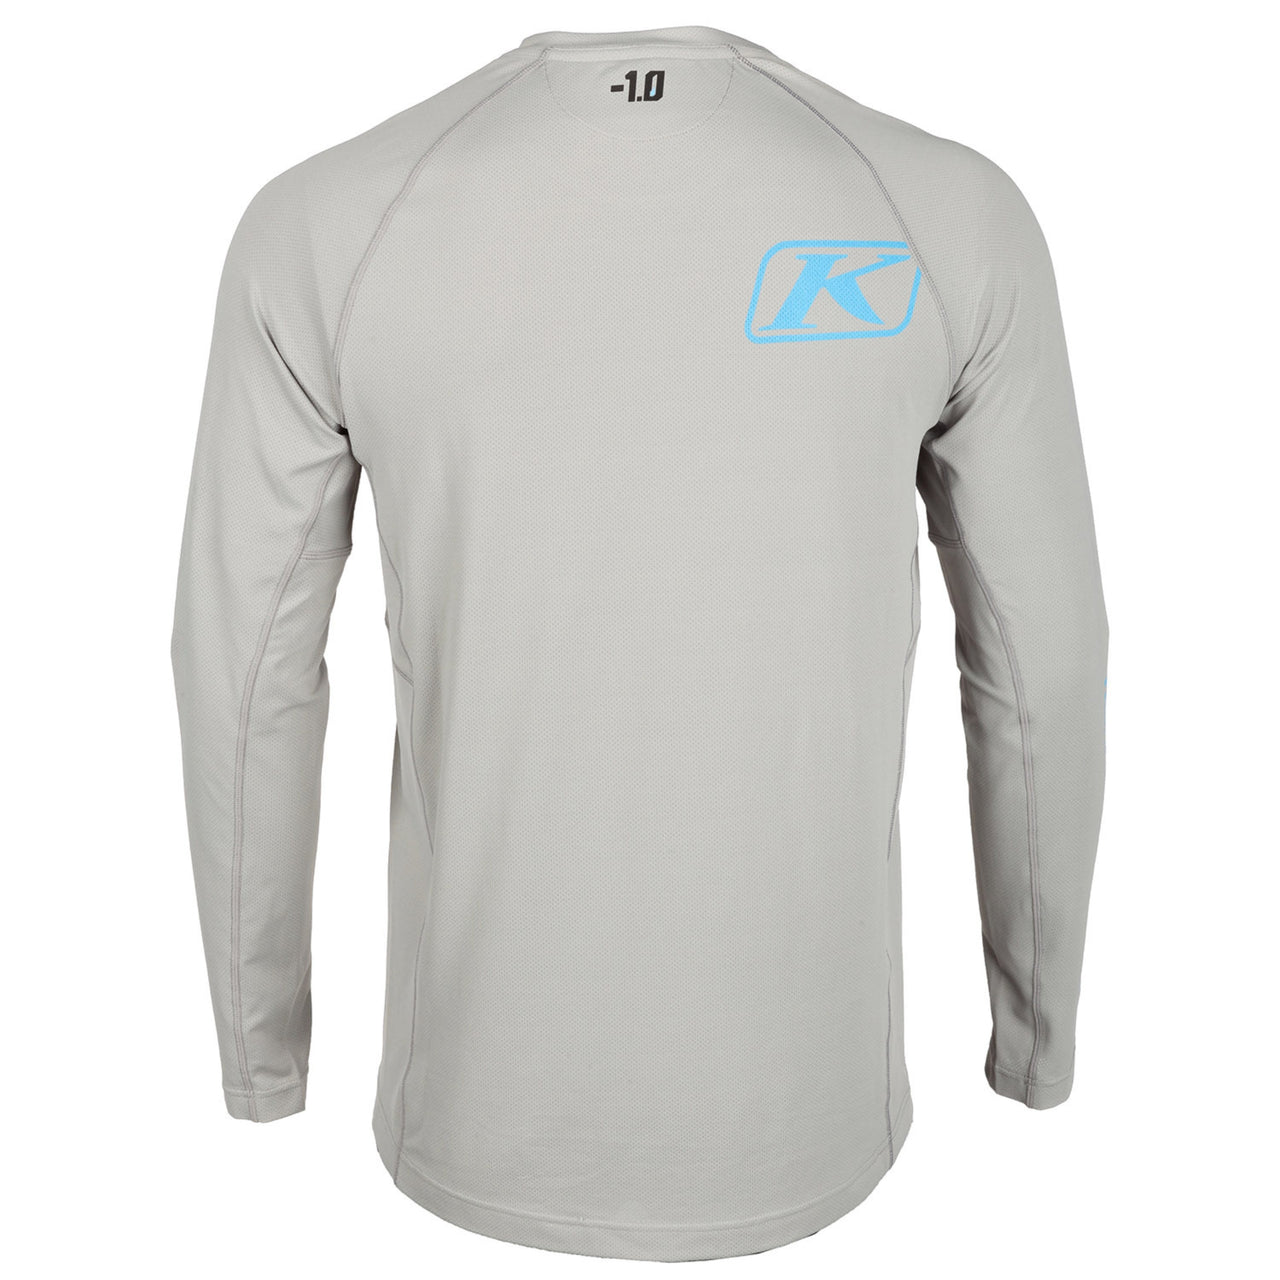 Klim Aggressor -1.0 Cooling Base Layers / Long Sleeve Shirt - Monument Gray